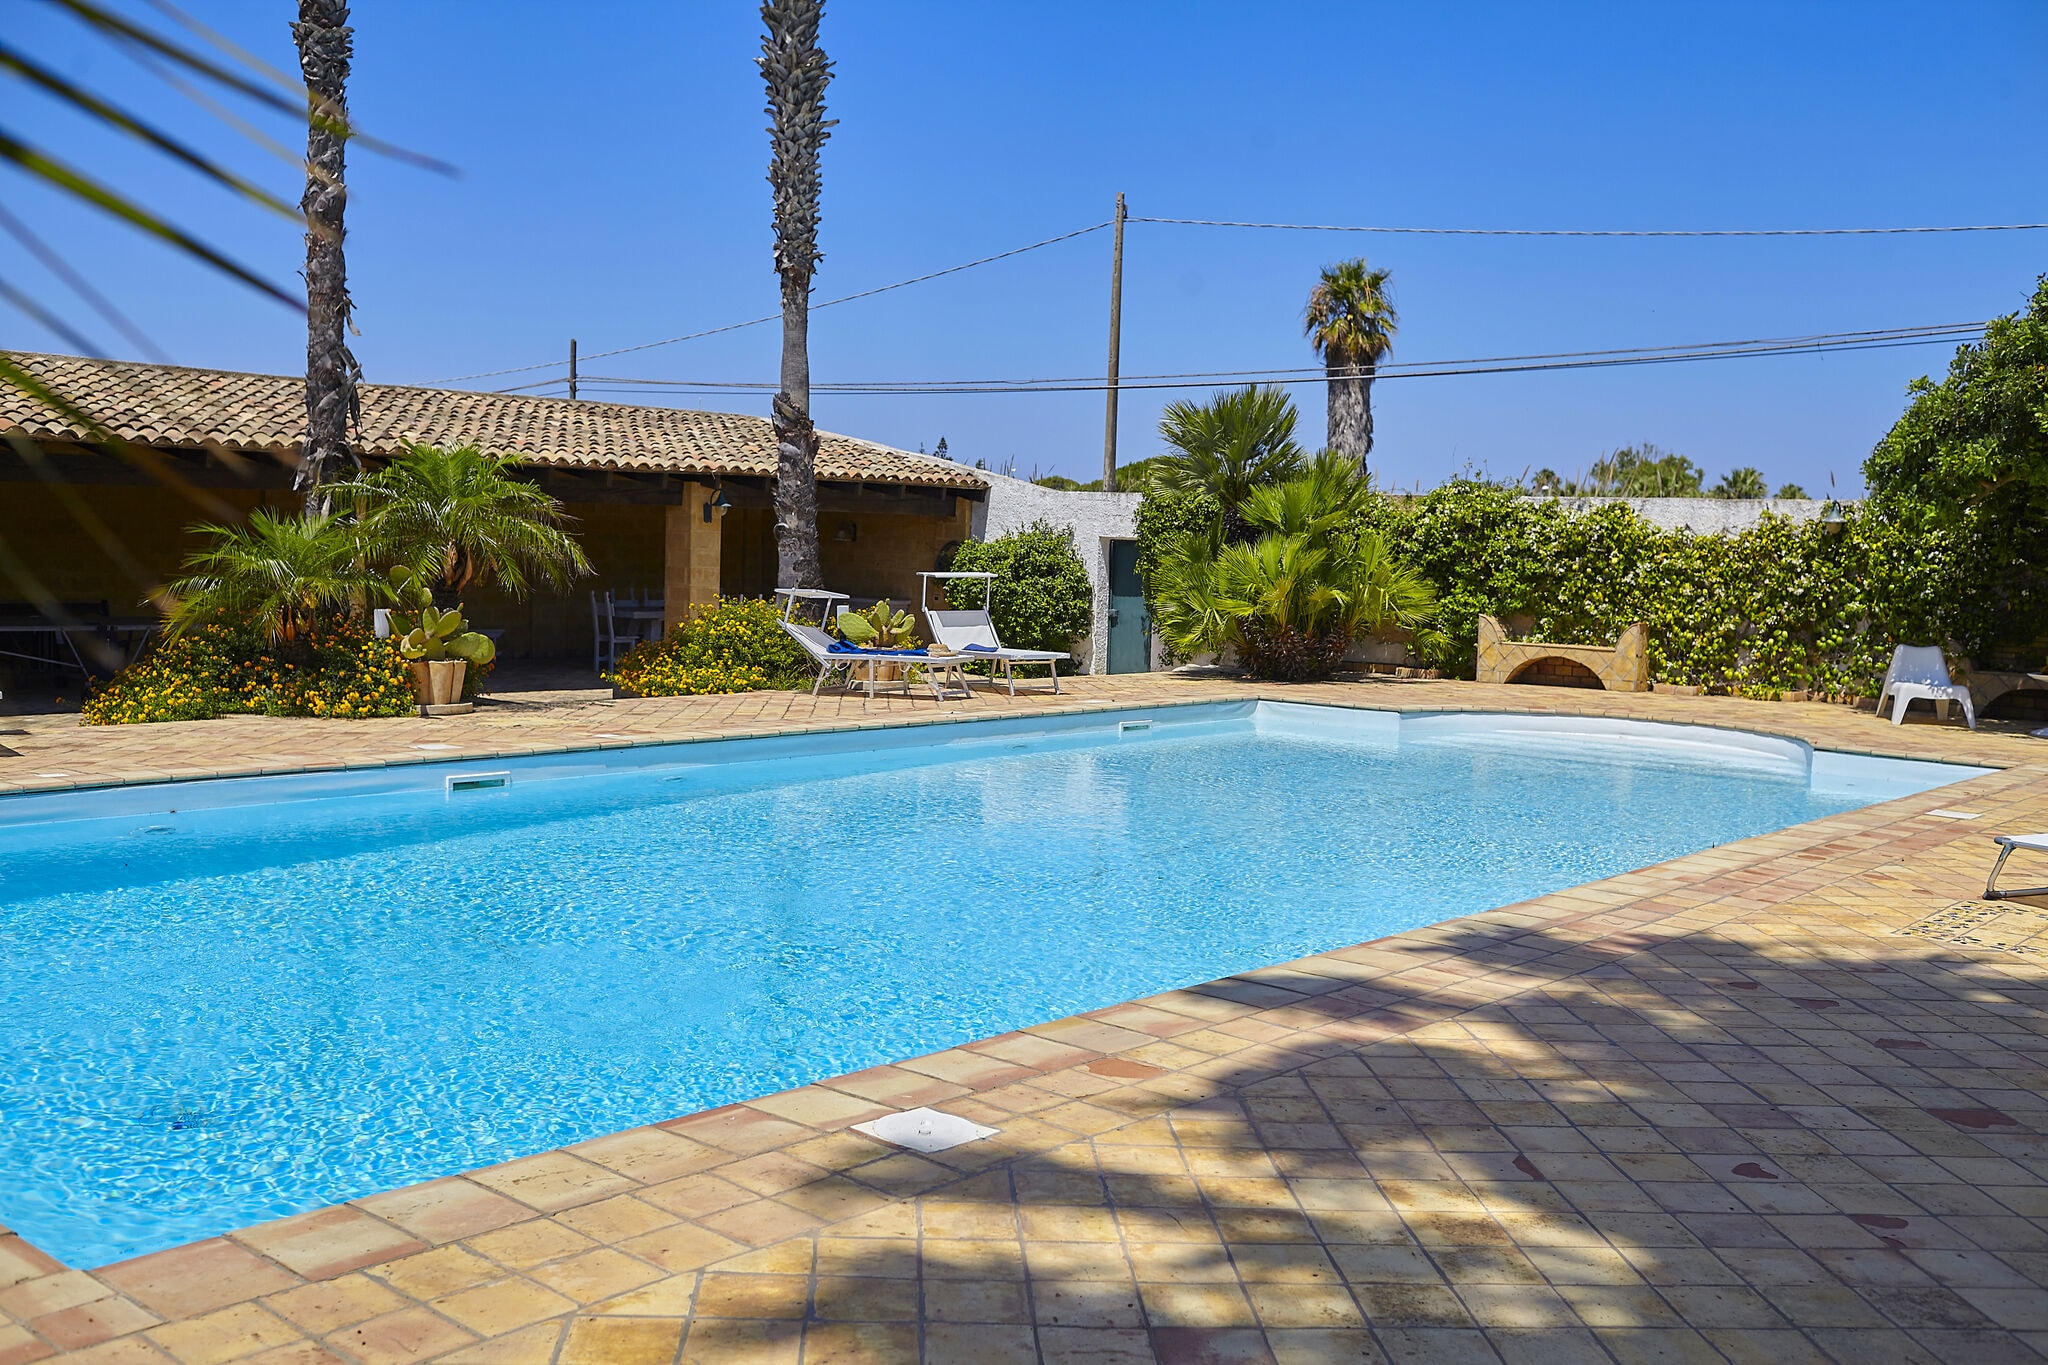 Villa im Grünen mit eigenem Swimmingpool in Marsala Sizilien